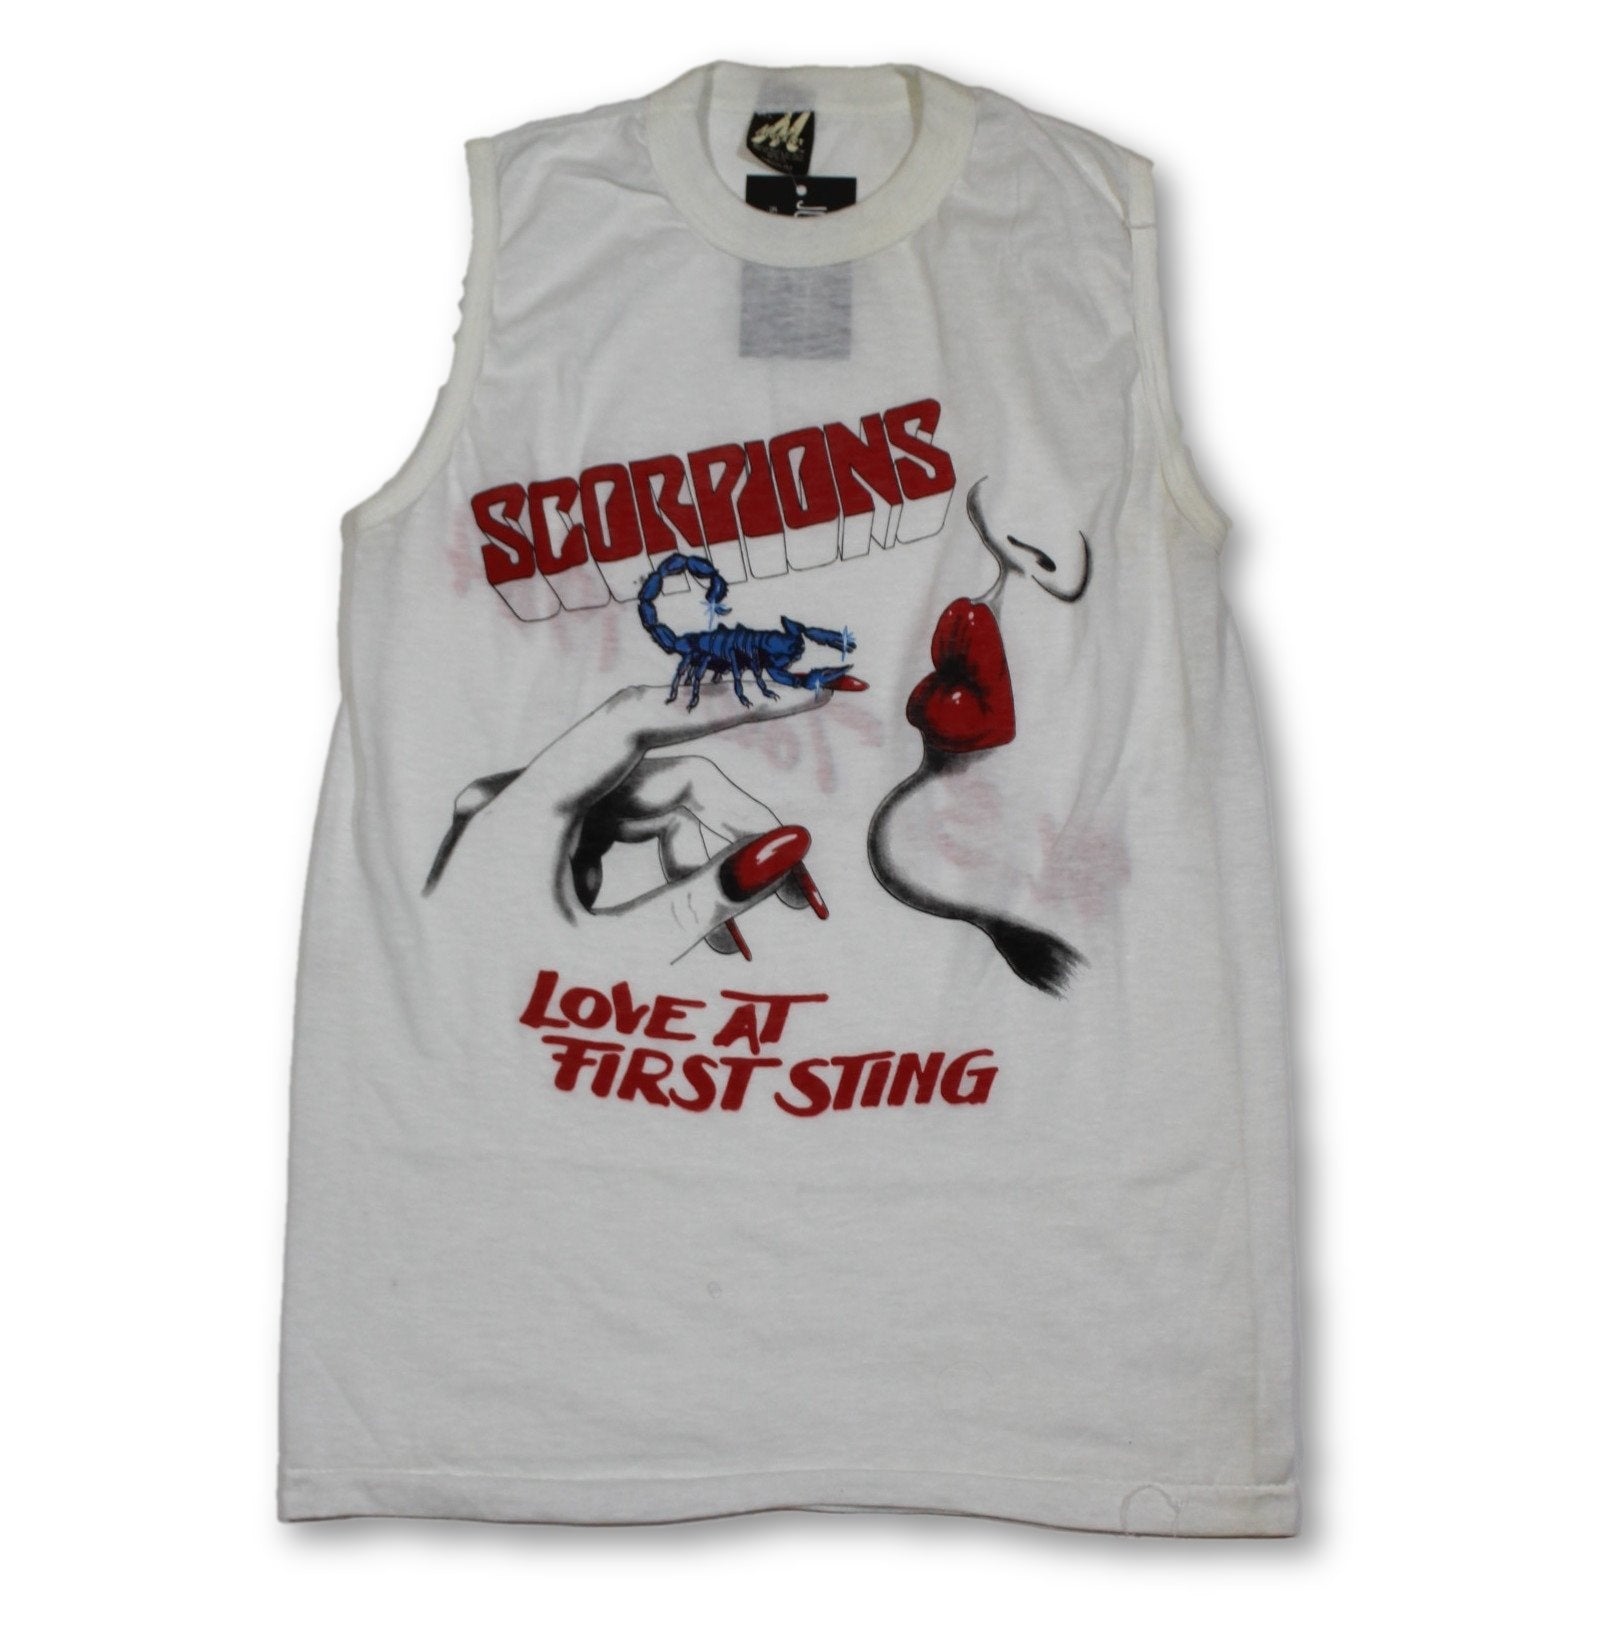 Vintage Scorpions "Love at First Sting" Sleeveless T-Shirt - jointcustodydc